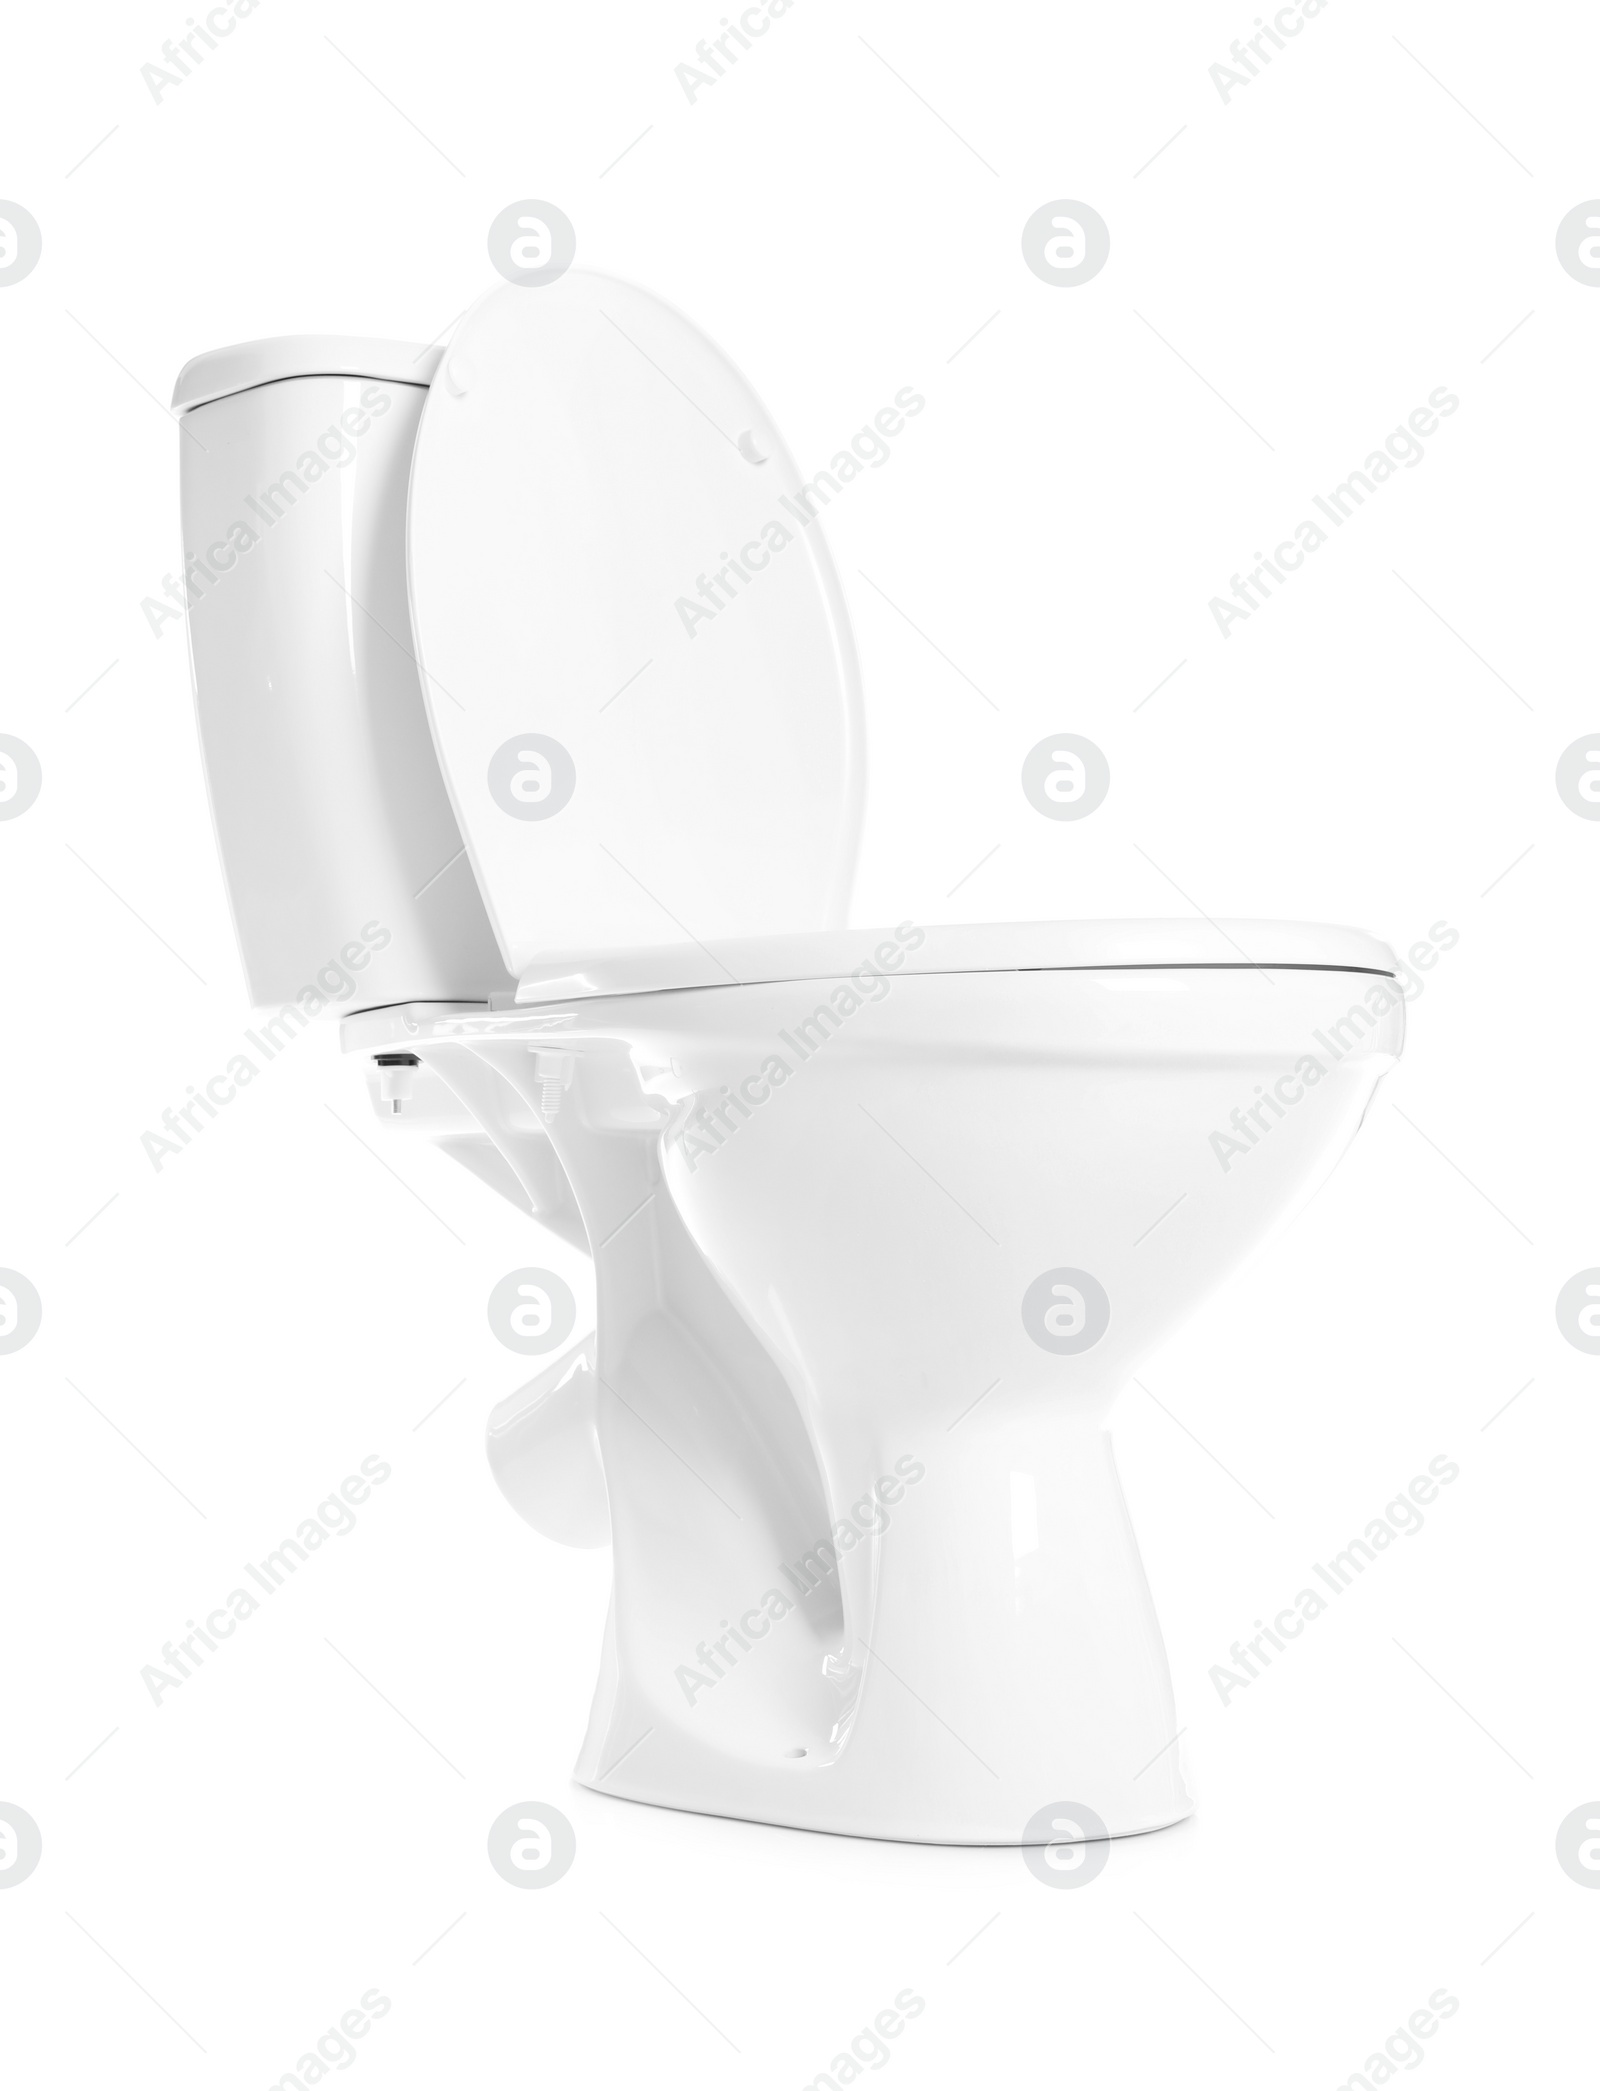 Photo of New ceramic toilet bowl on white background